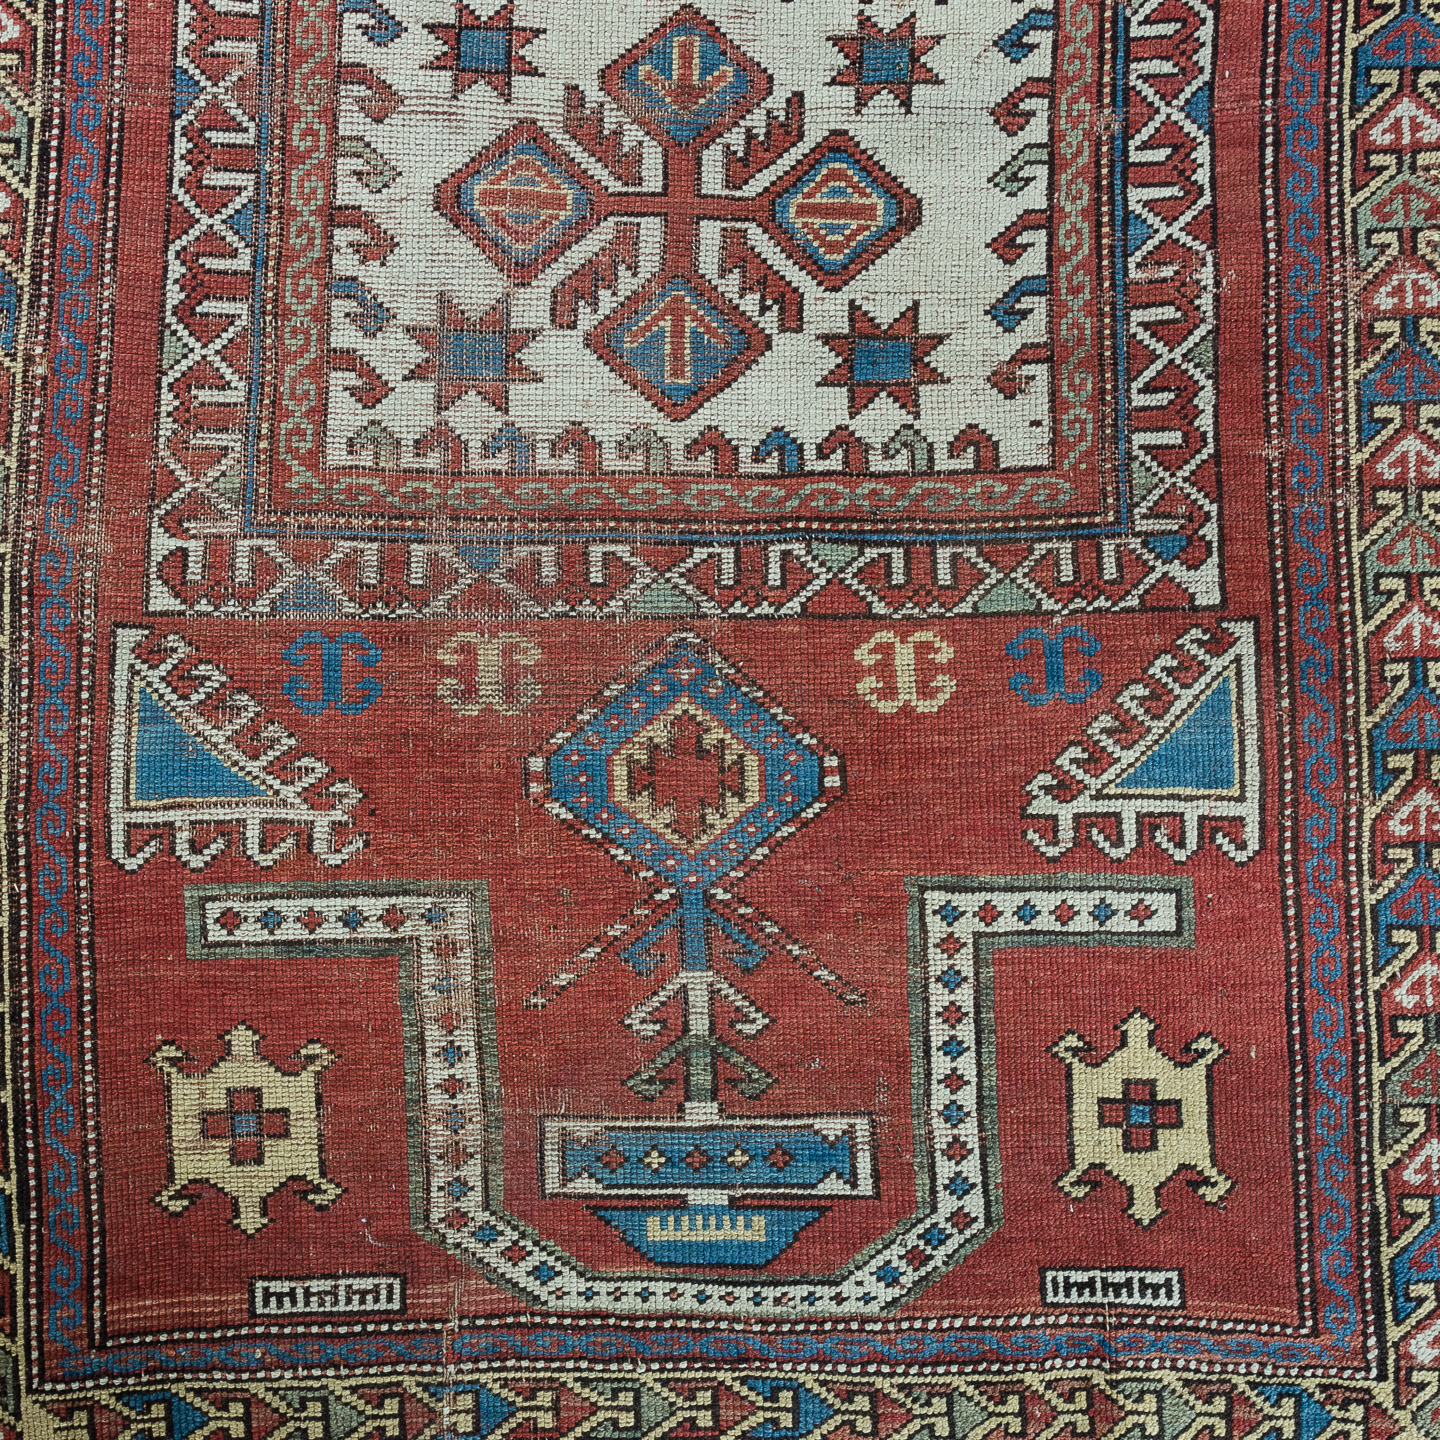 Early Twentieth Century Kazak Prayer, Am Home Textiles Rugs